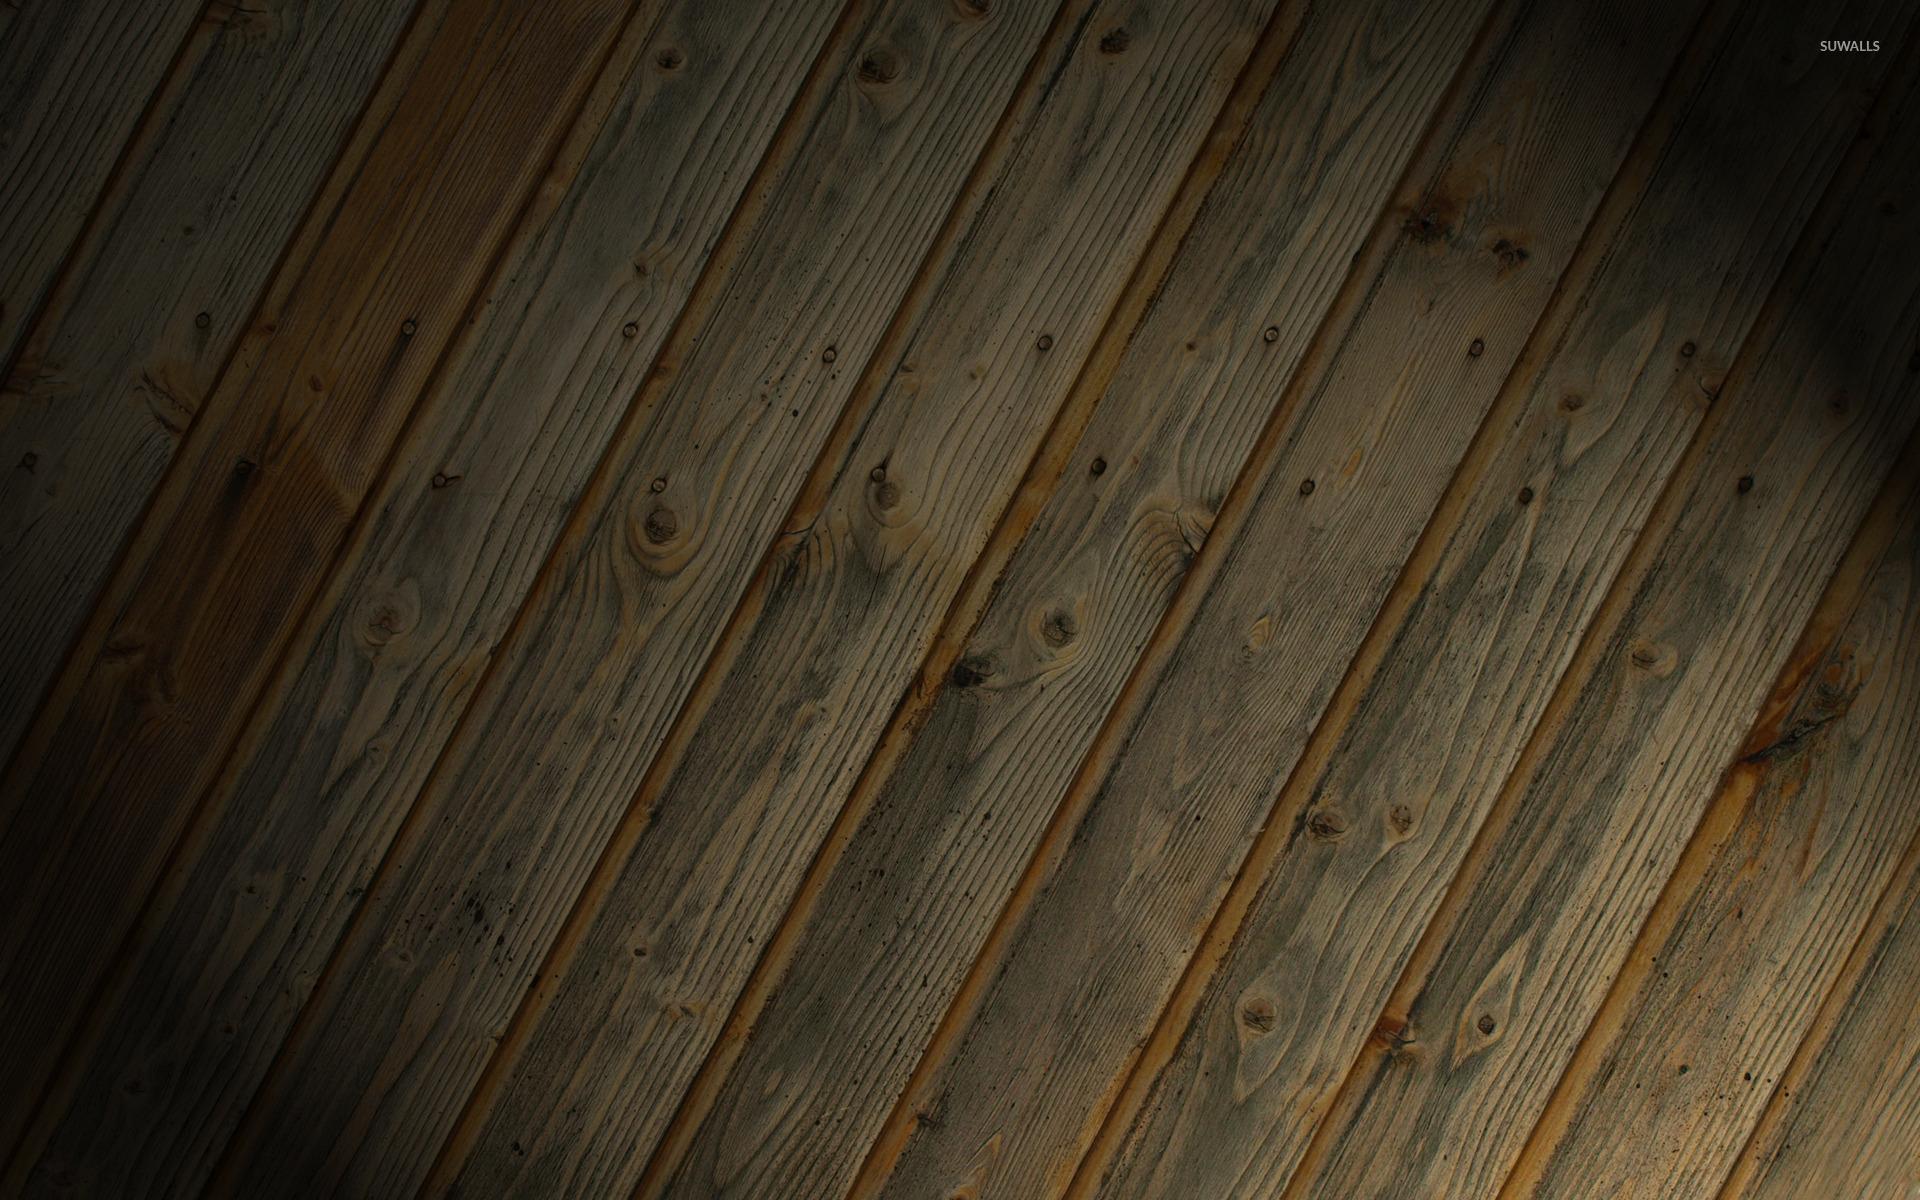 Wood texture [2] wallpaper wallpaper